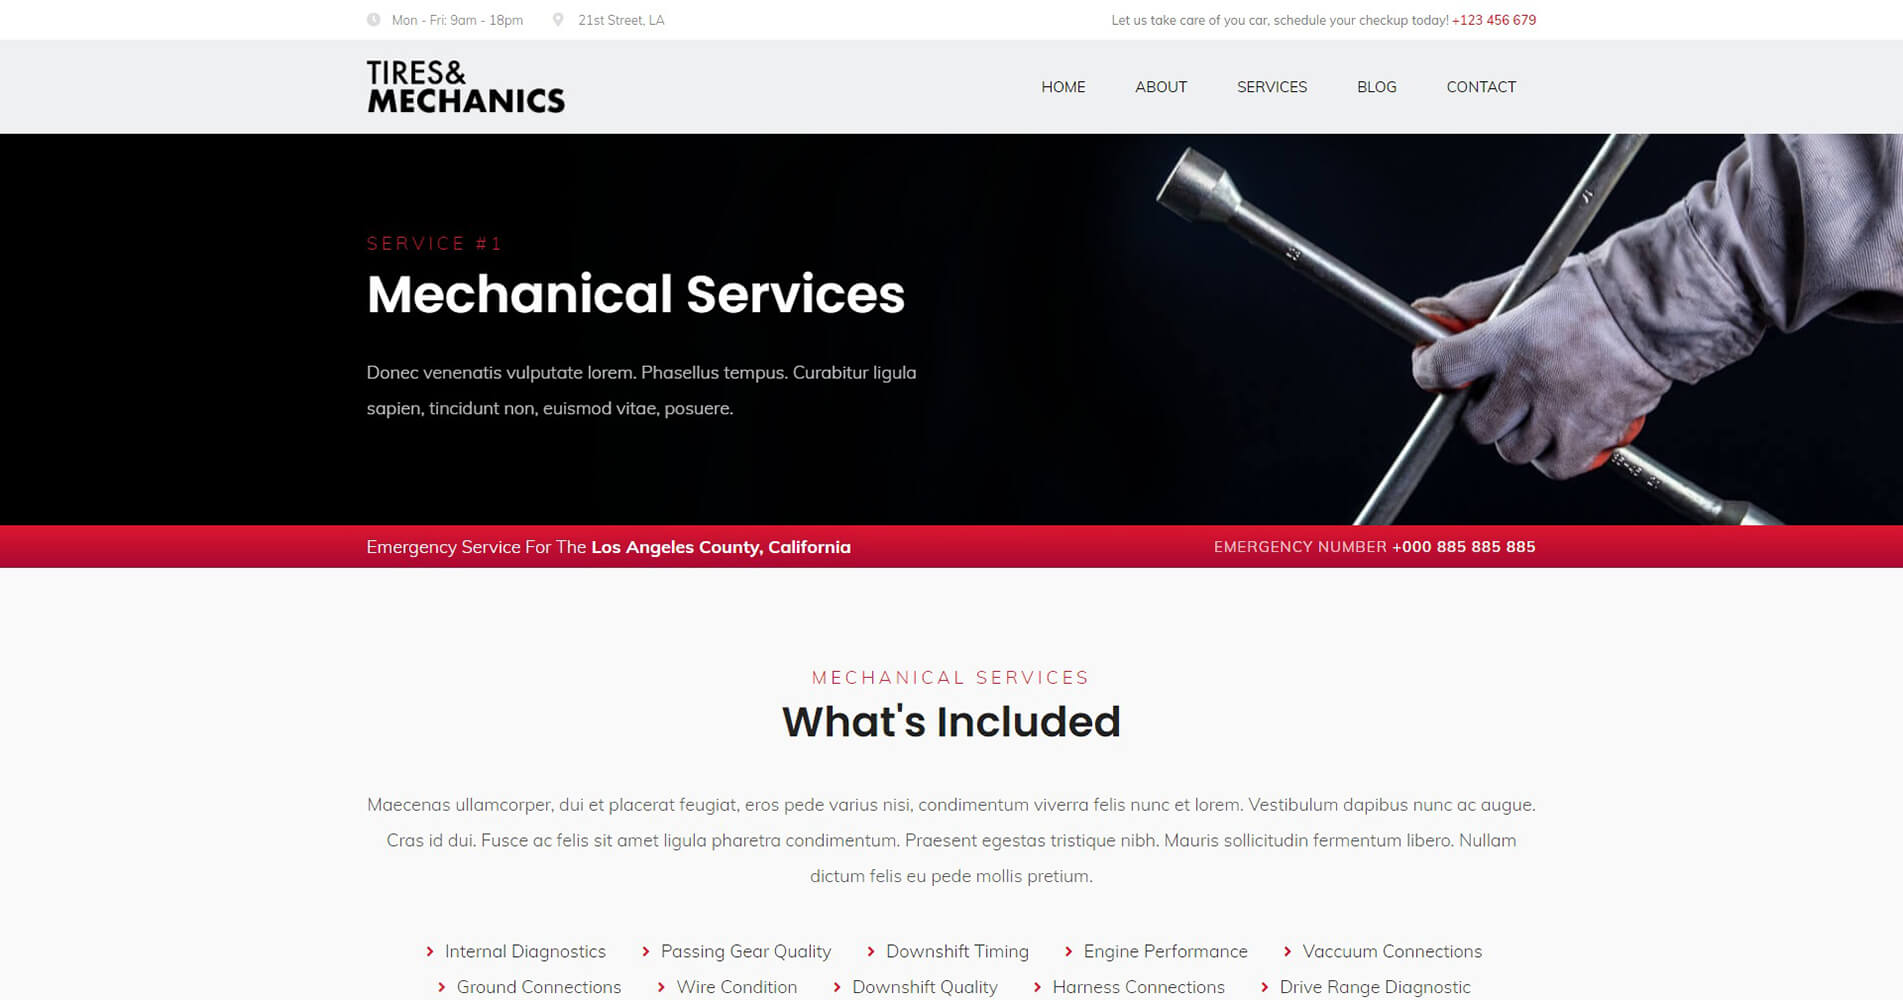 Tires & Mechanics Mechanical Service